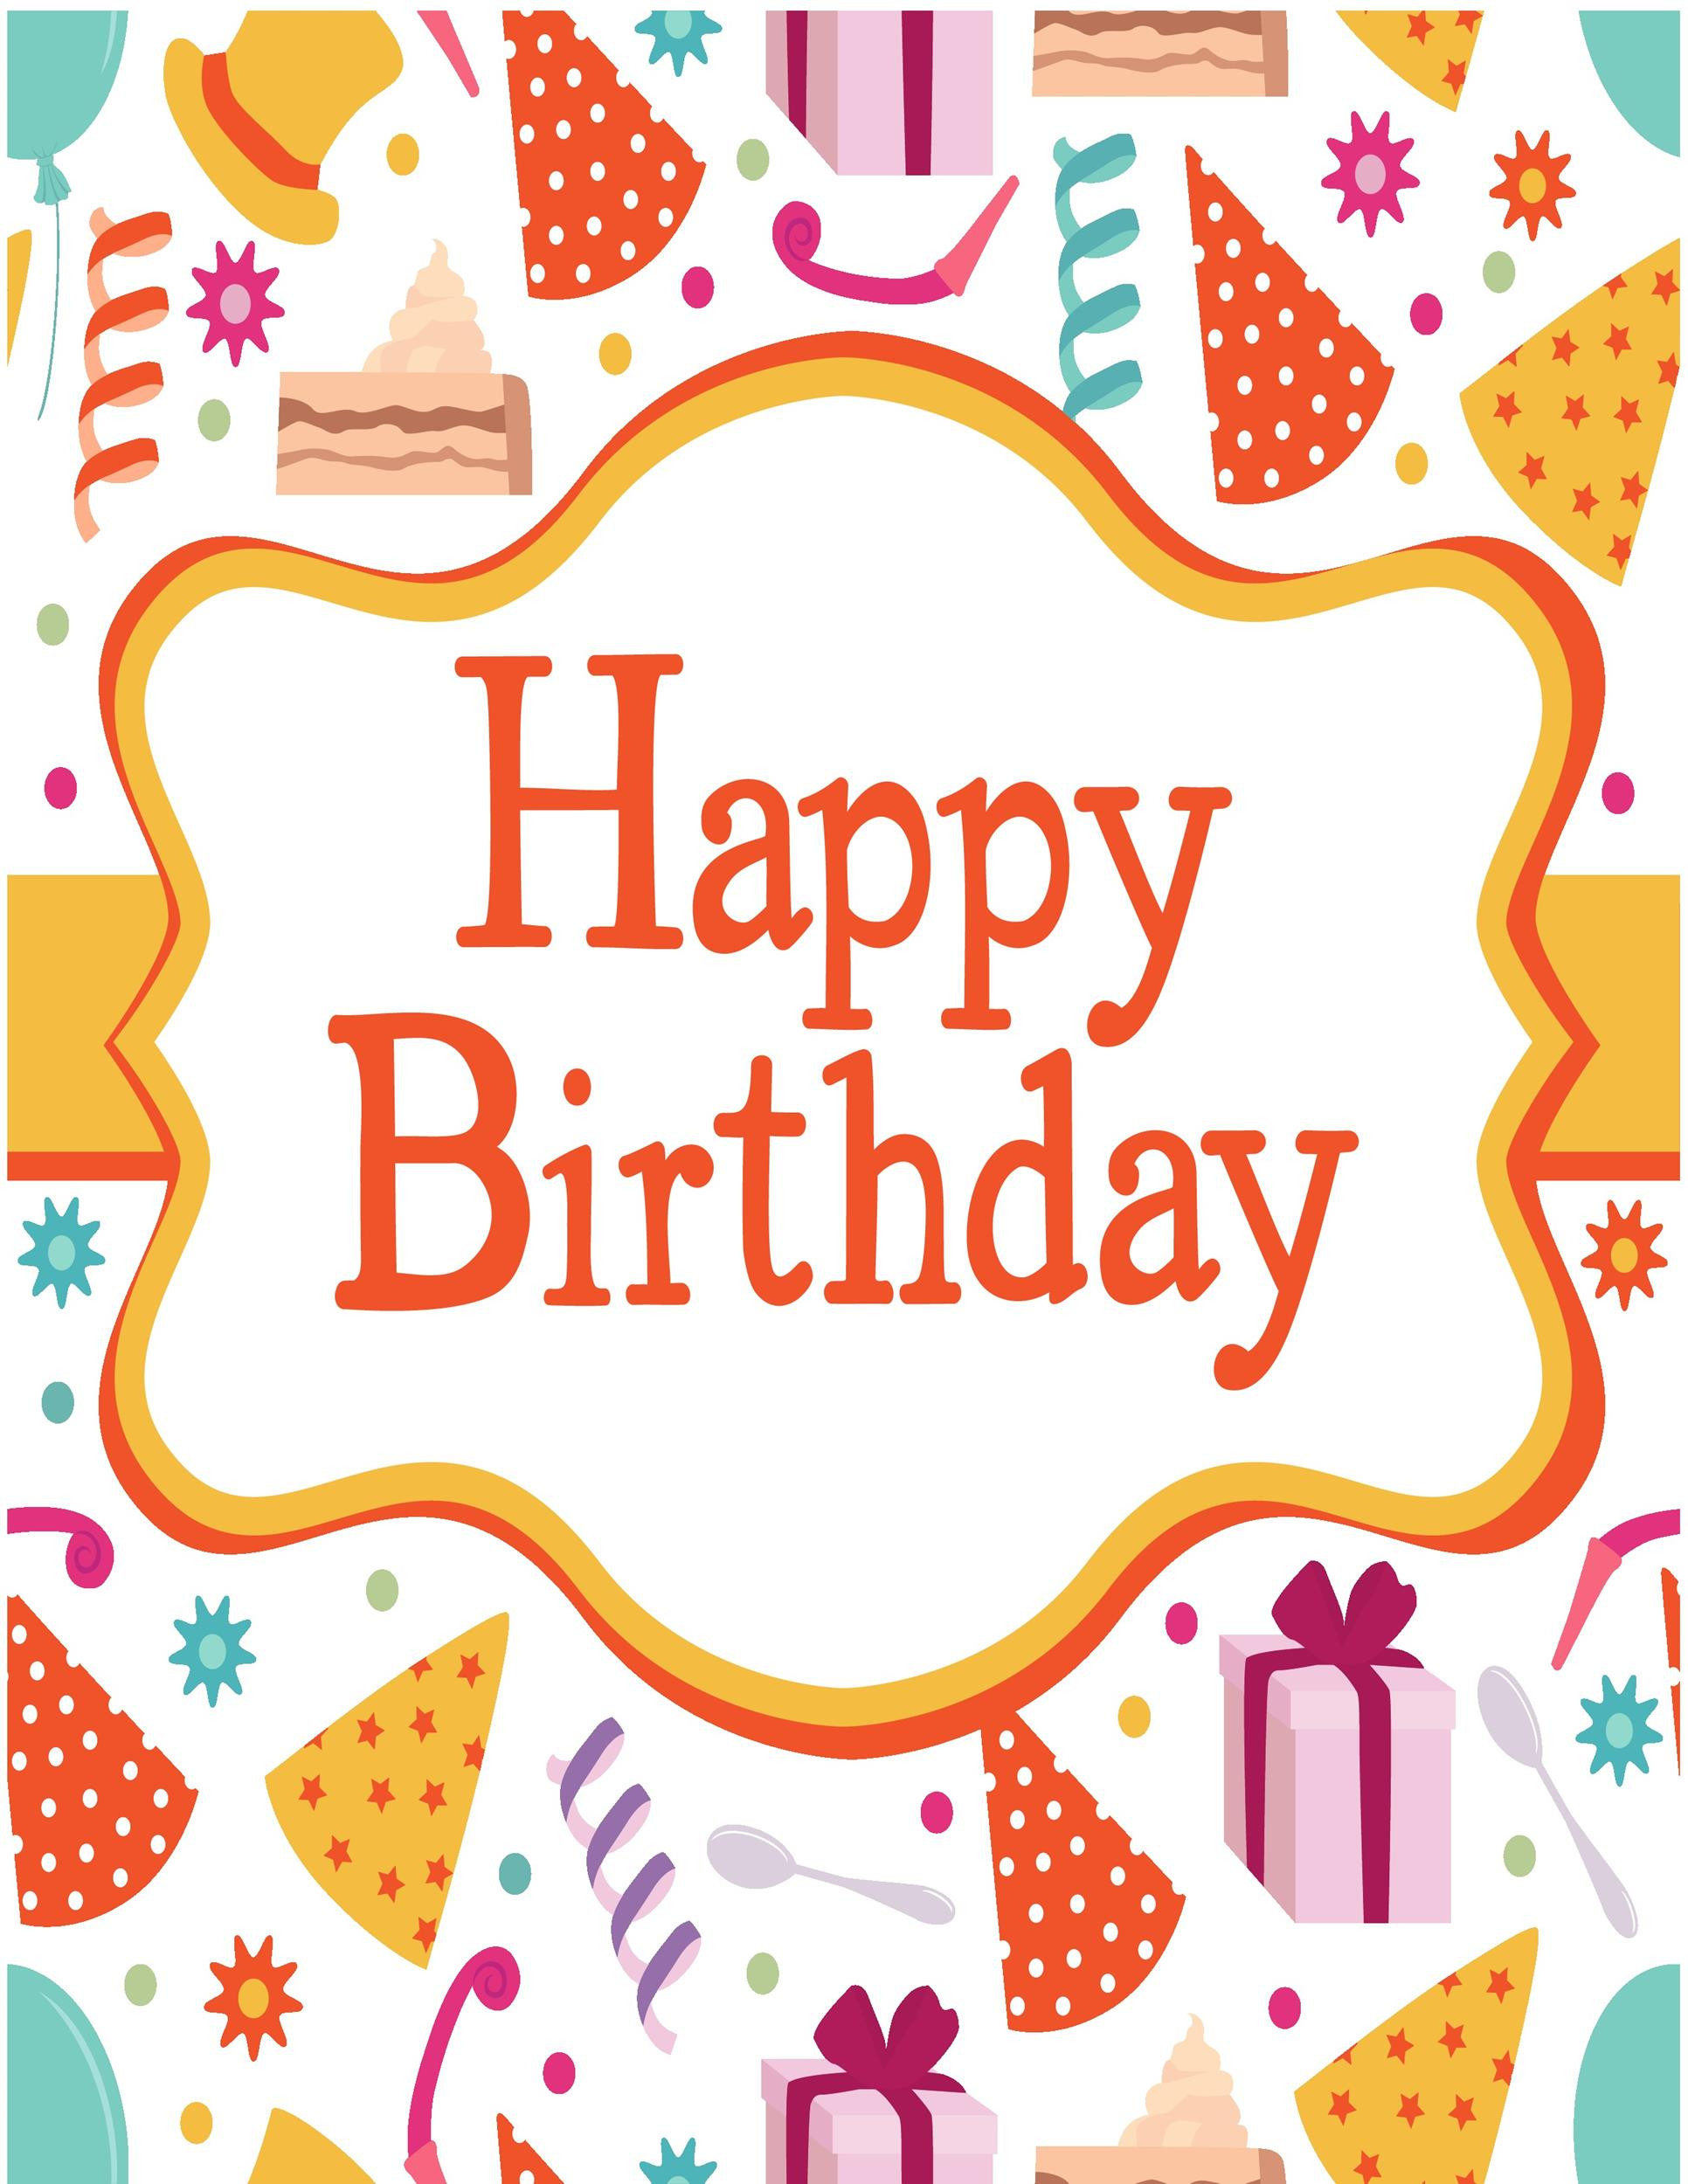 Free Birthday Cards Download
 40 FREE Birthday Card Templates TemplateLab